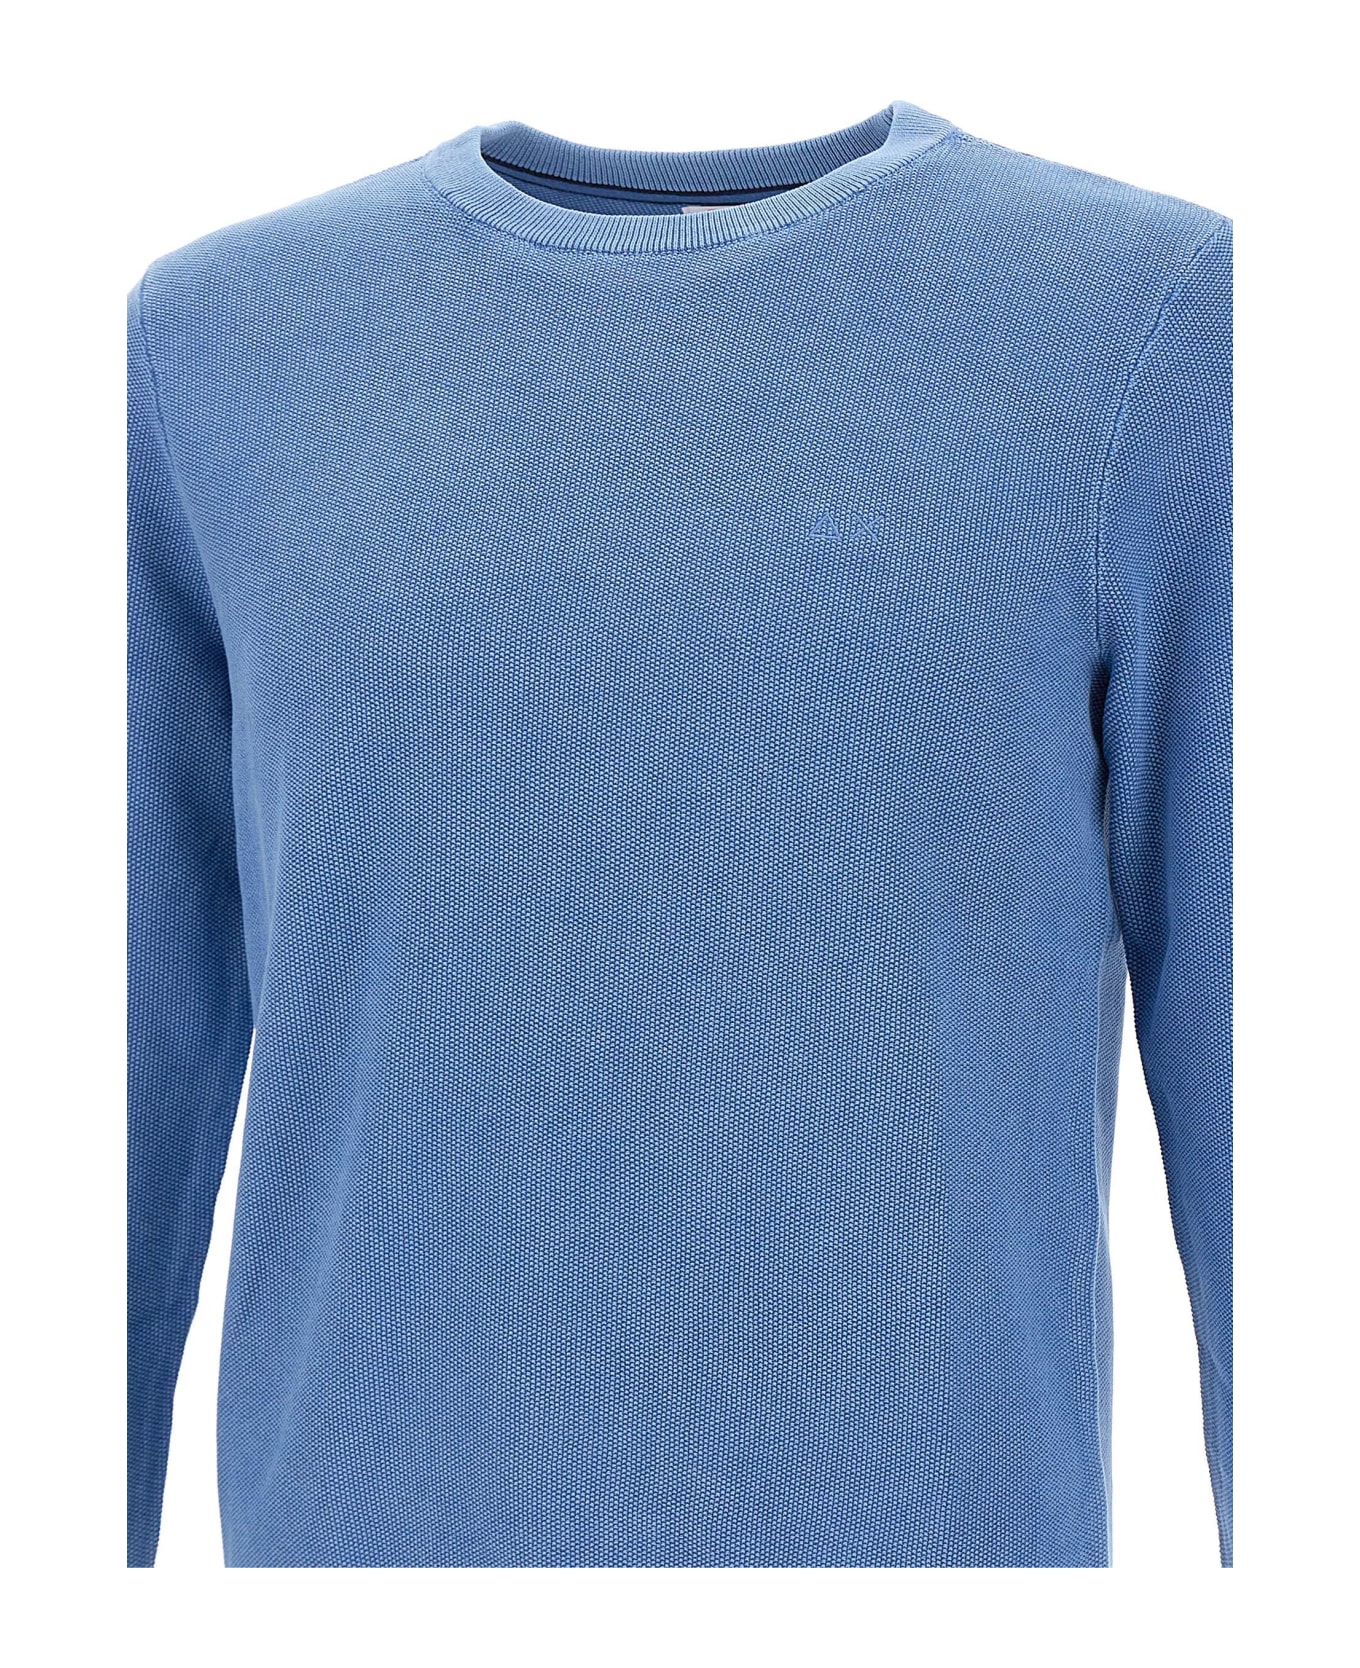 Sun 68 "round Vintage" Sweater Cotton - BLUE ニットウェア